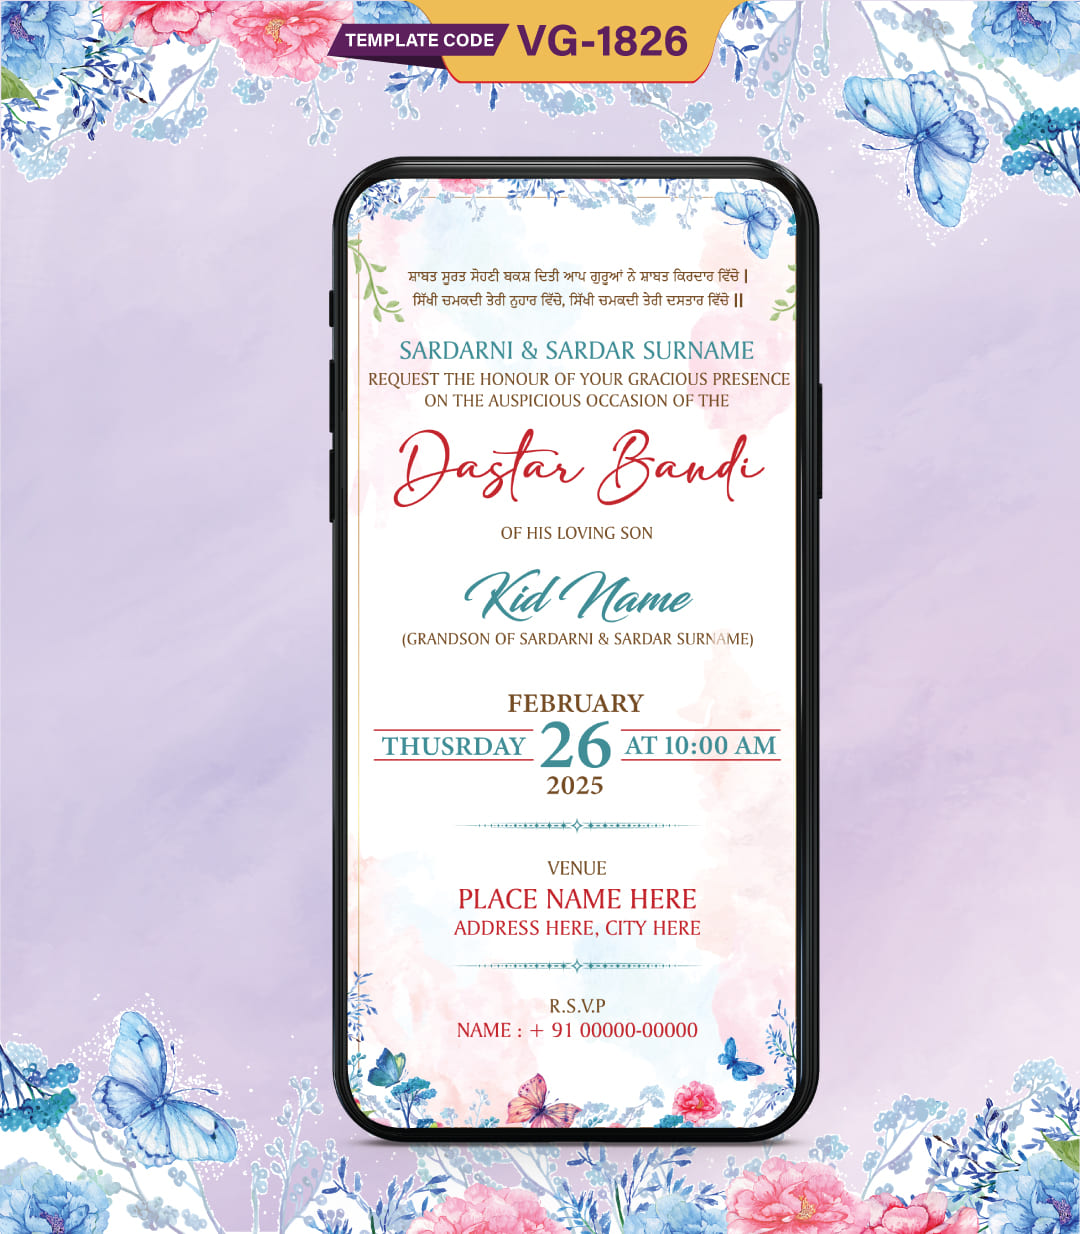 Dastar Bandi Invitation Pdf Card